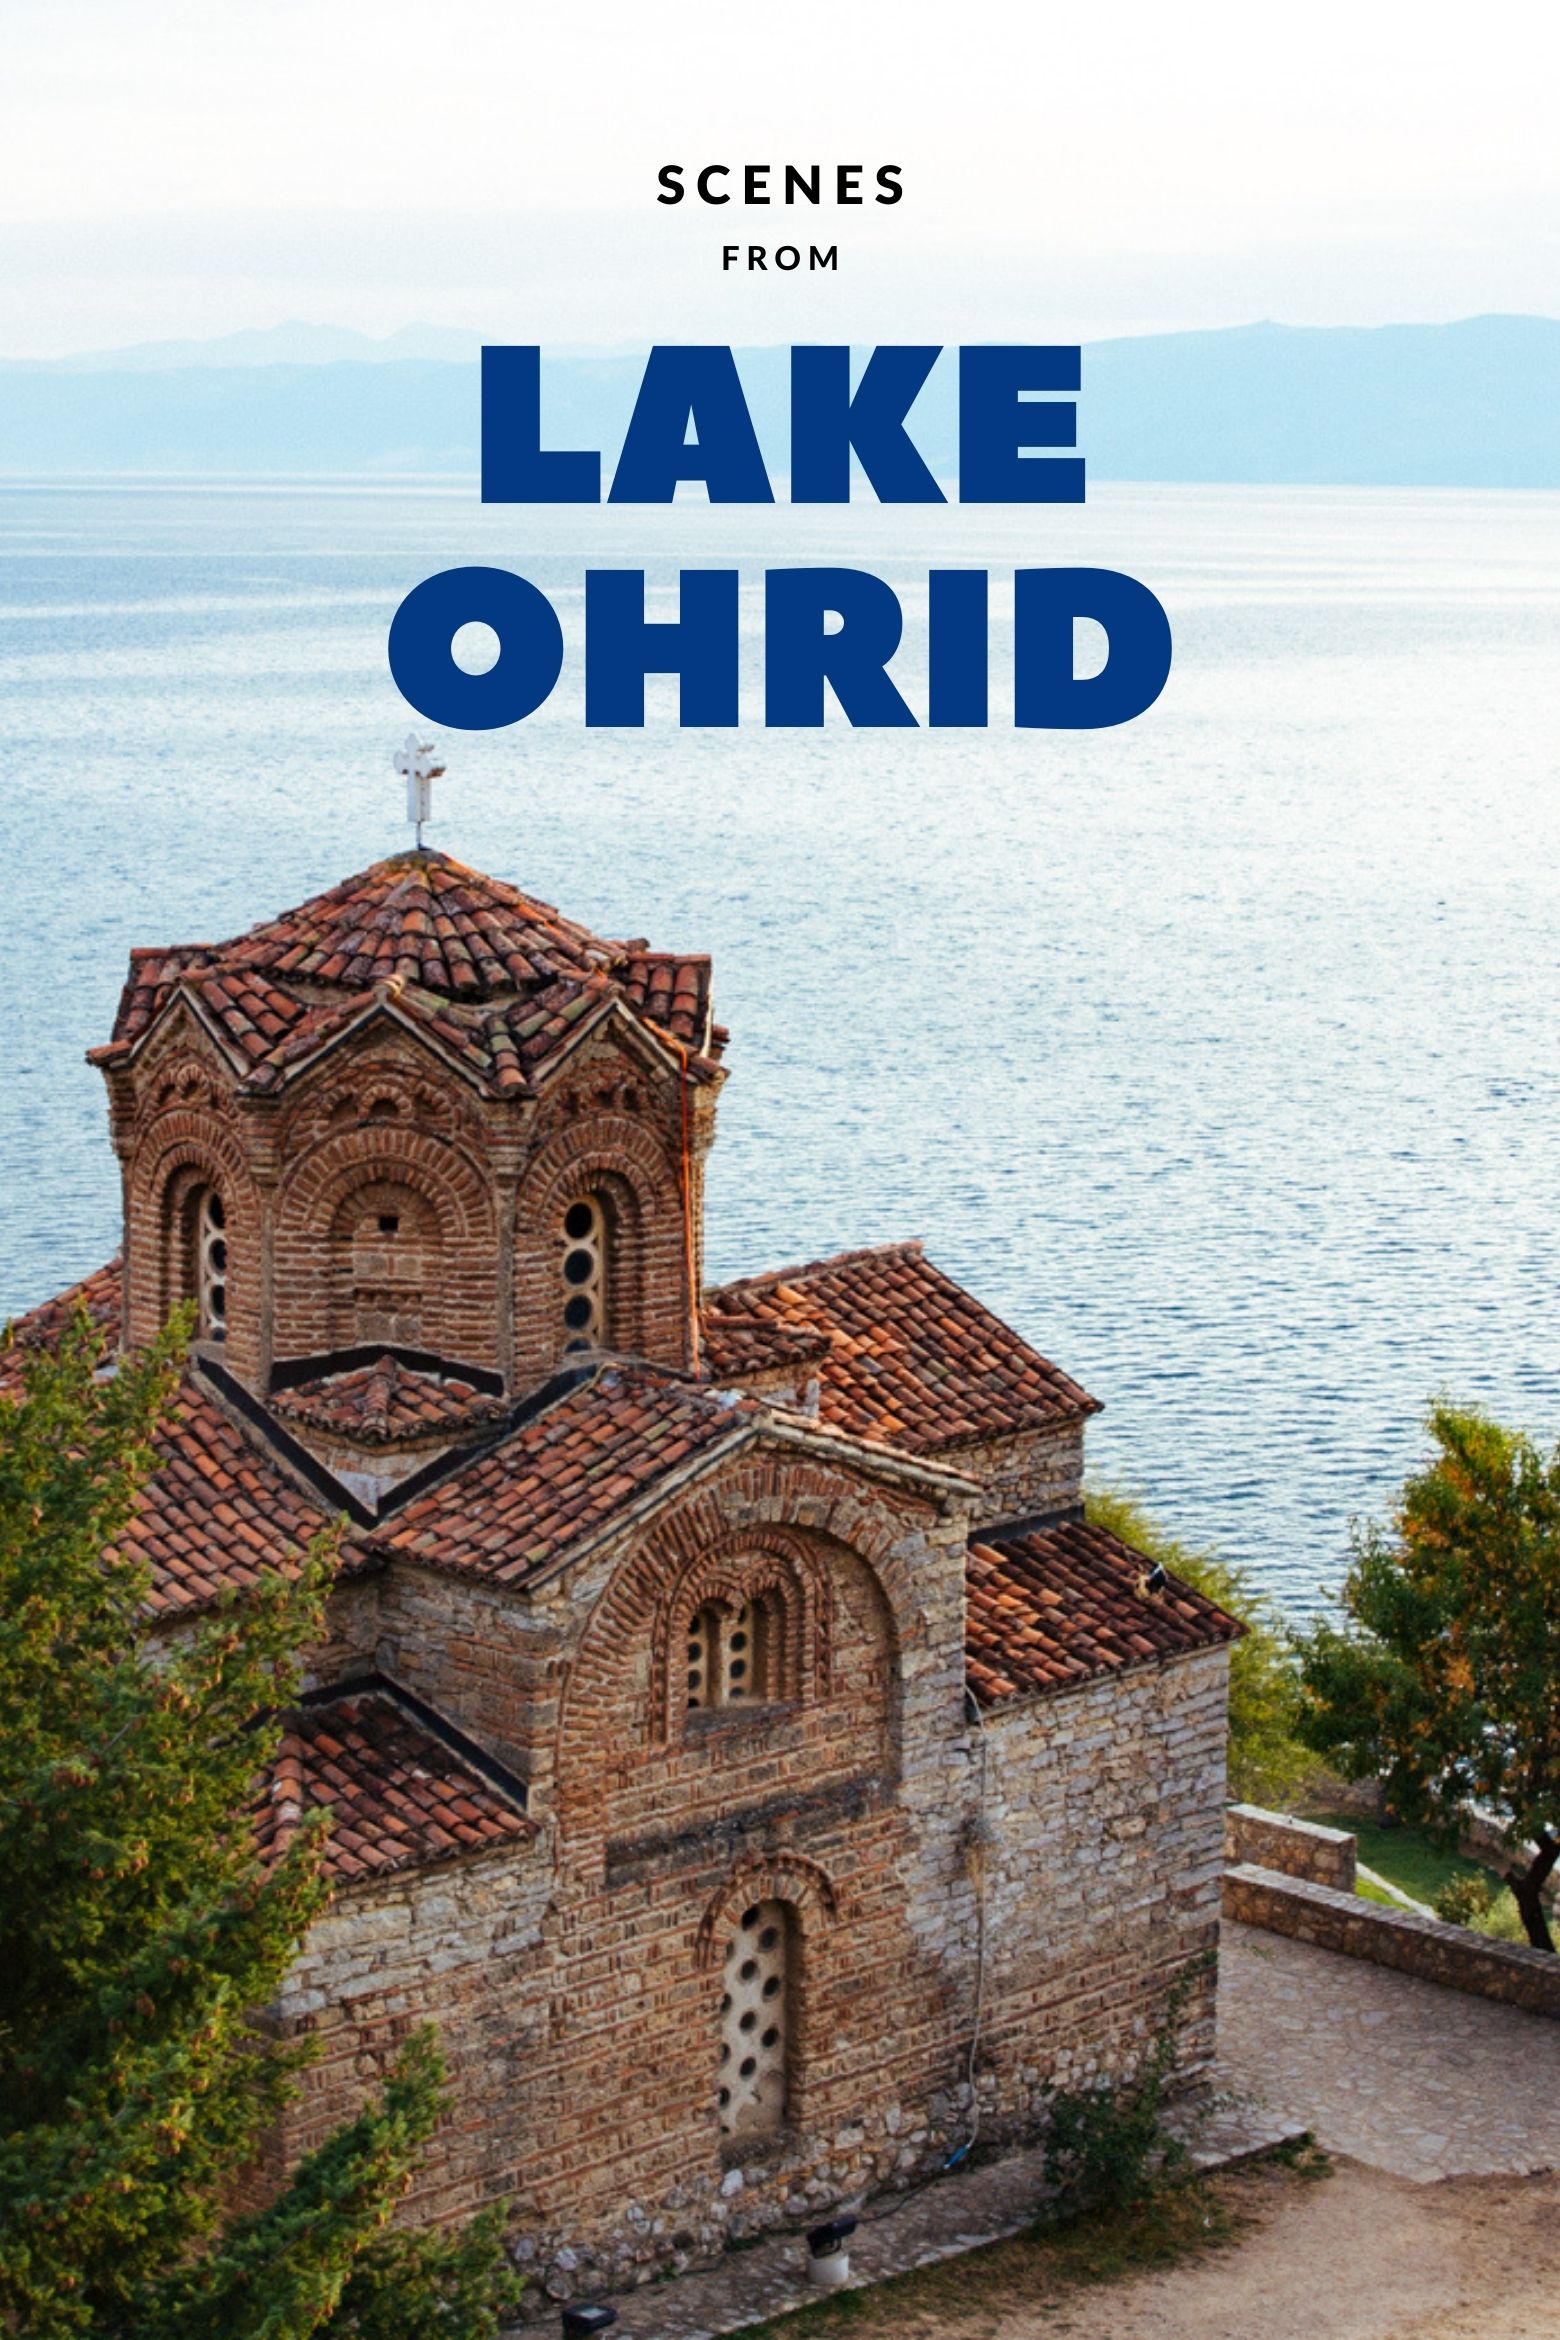 Scenes from Lake Ohrid